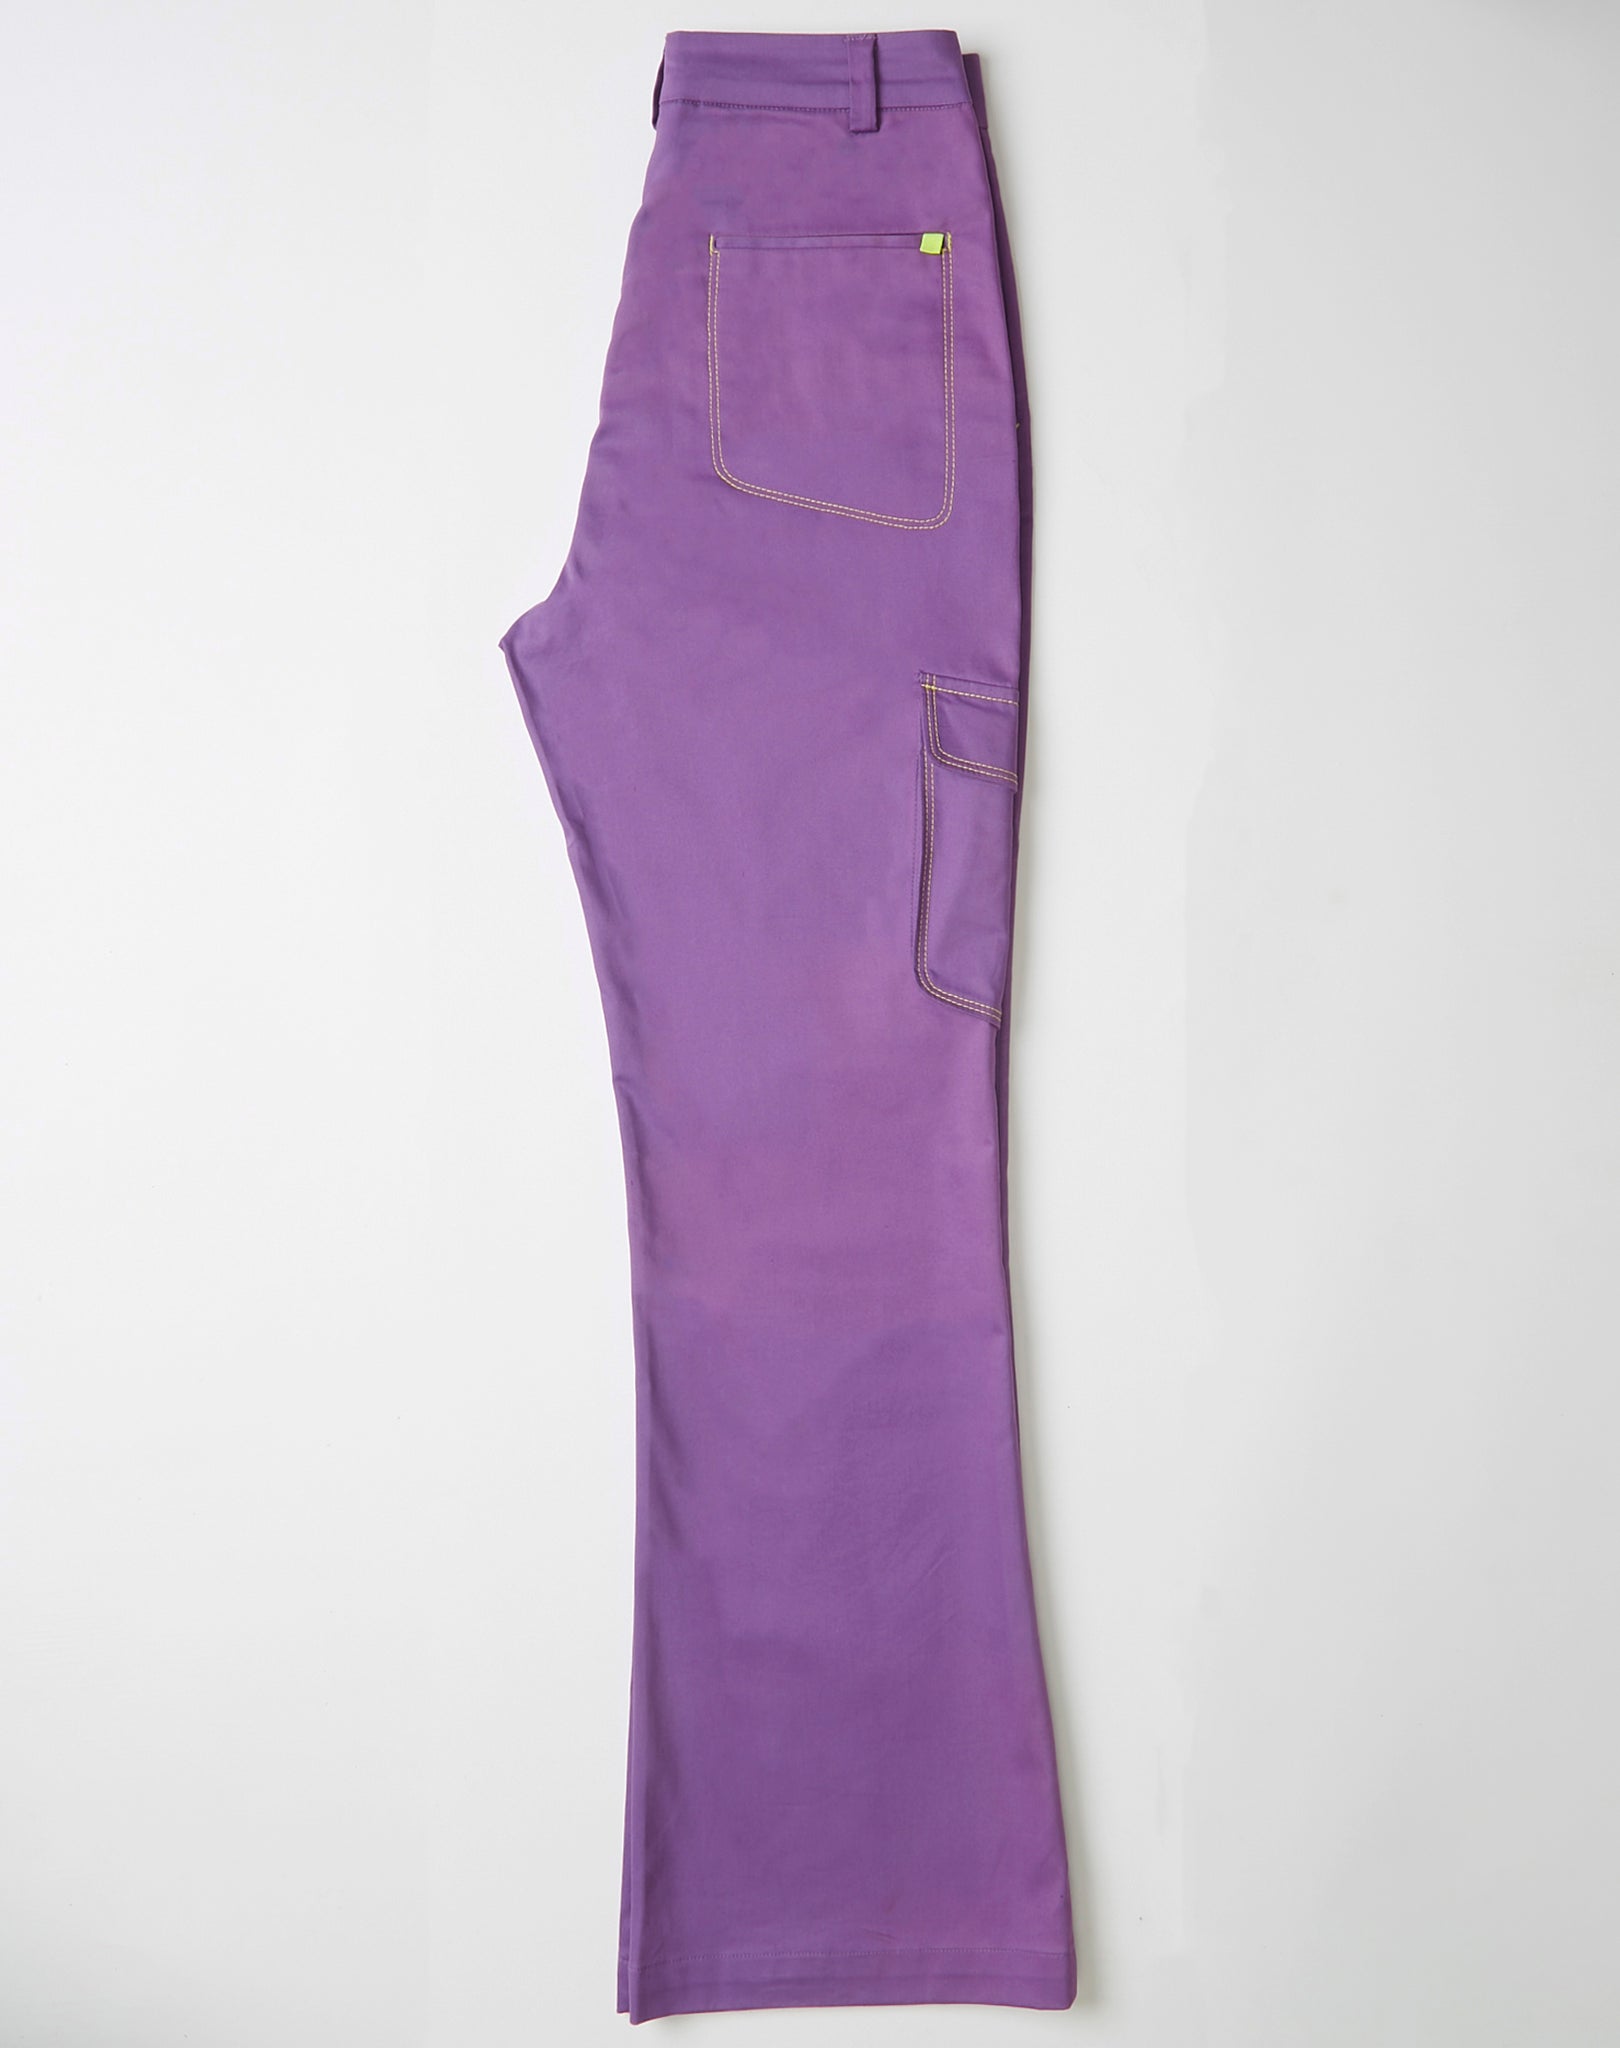 Purple bootleg pants 